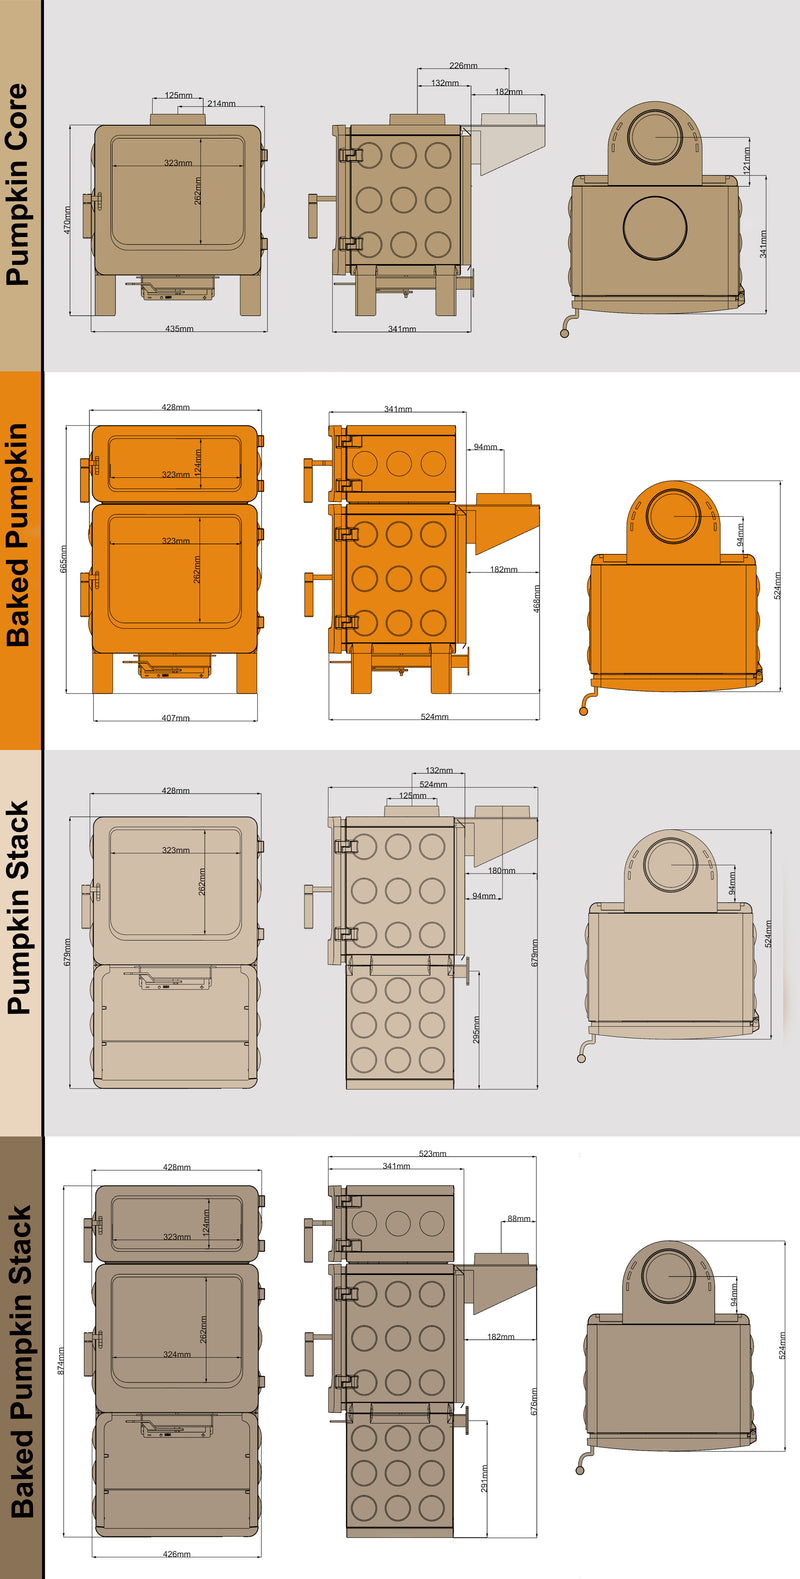 Ekol PumpkinPie stove dimensions